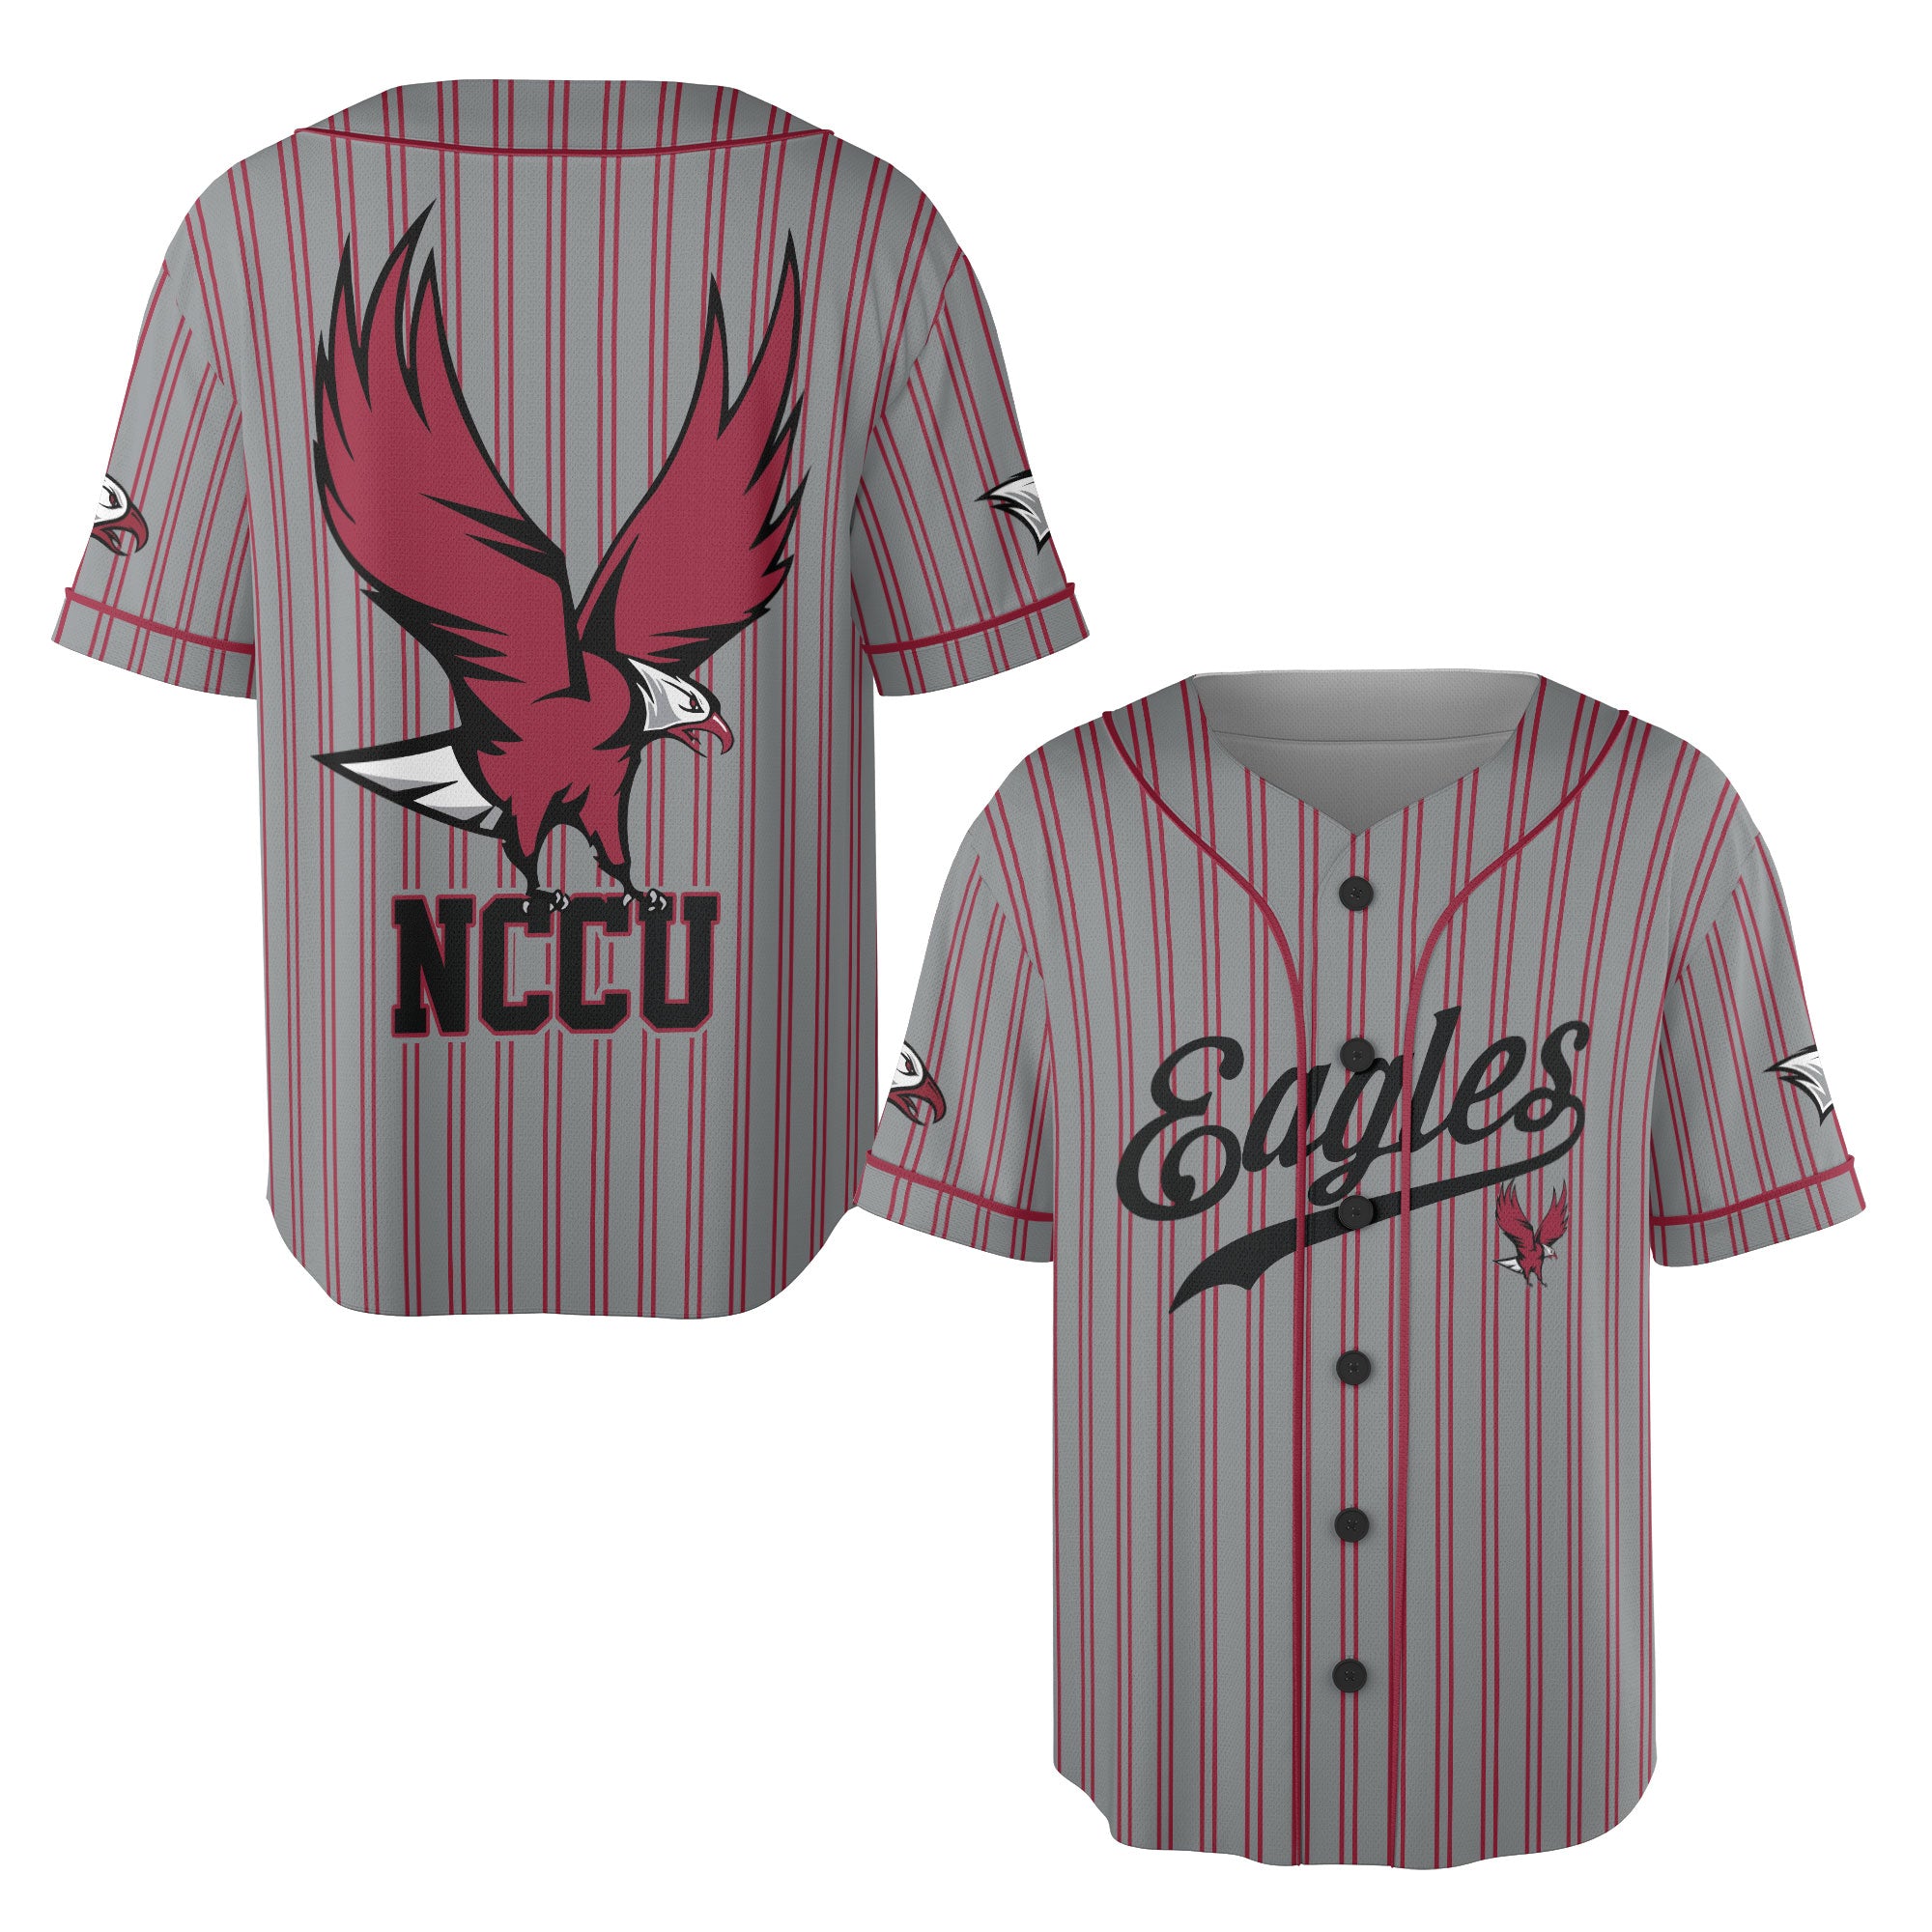 NCCU Eagles Baseball Jersey All-Over-Print - joxtee